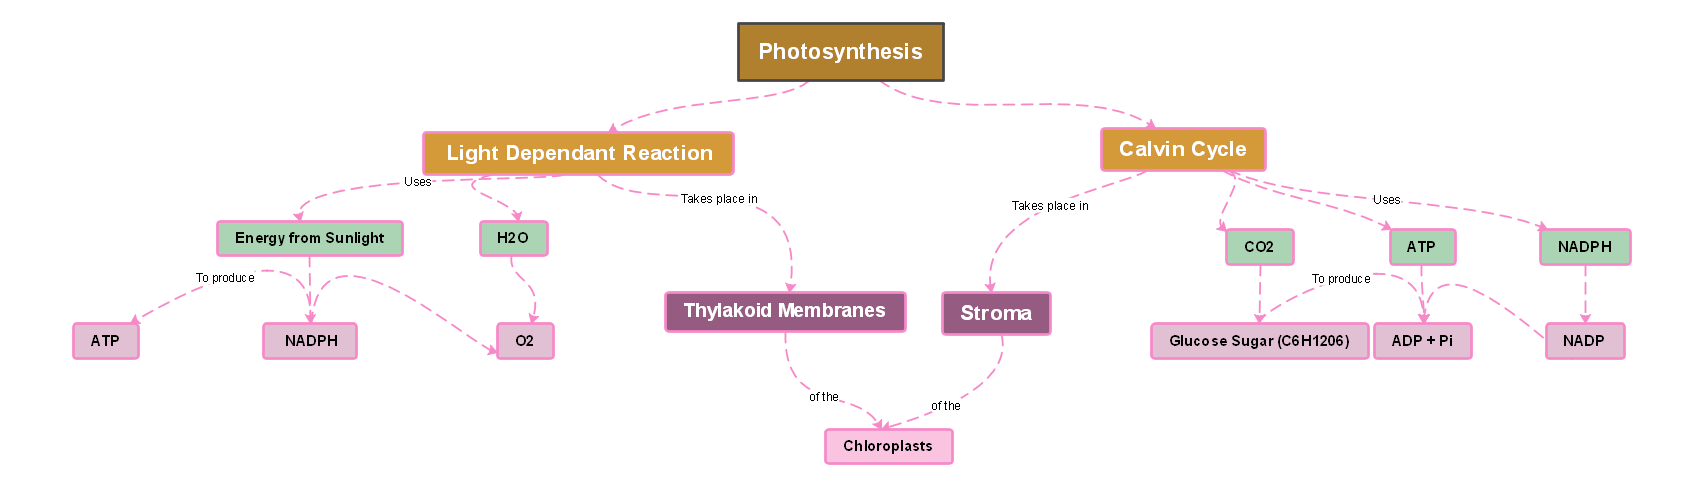 Mapa conceptual de la fotosíntesis